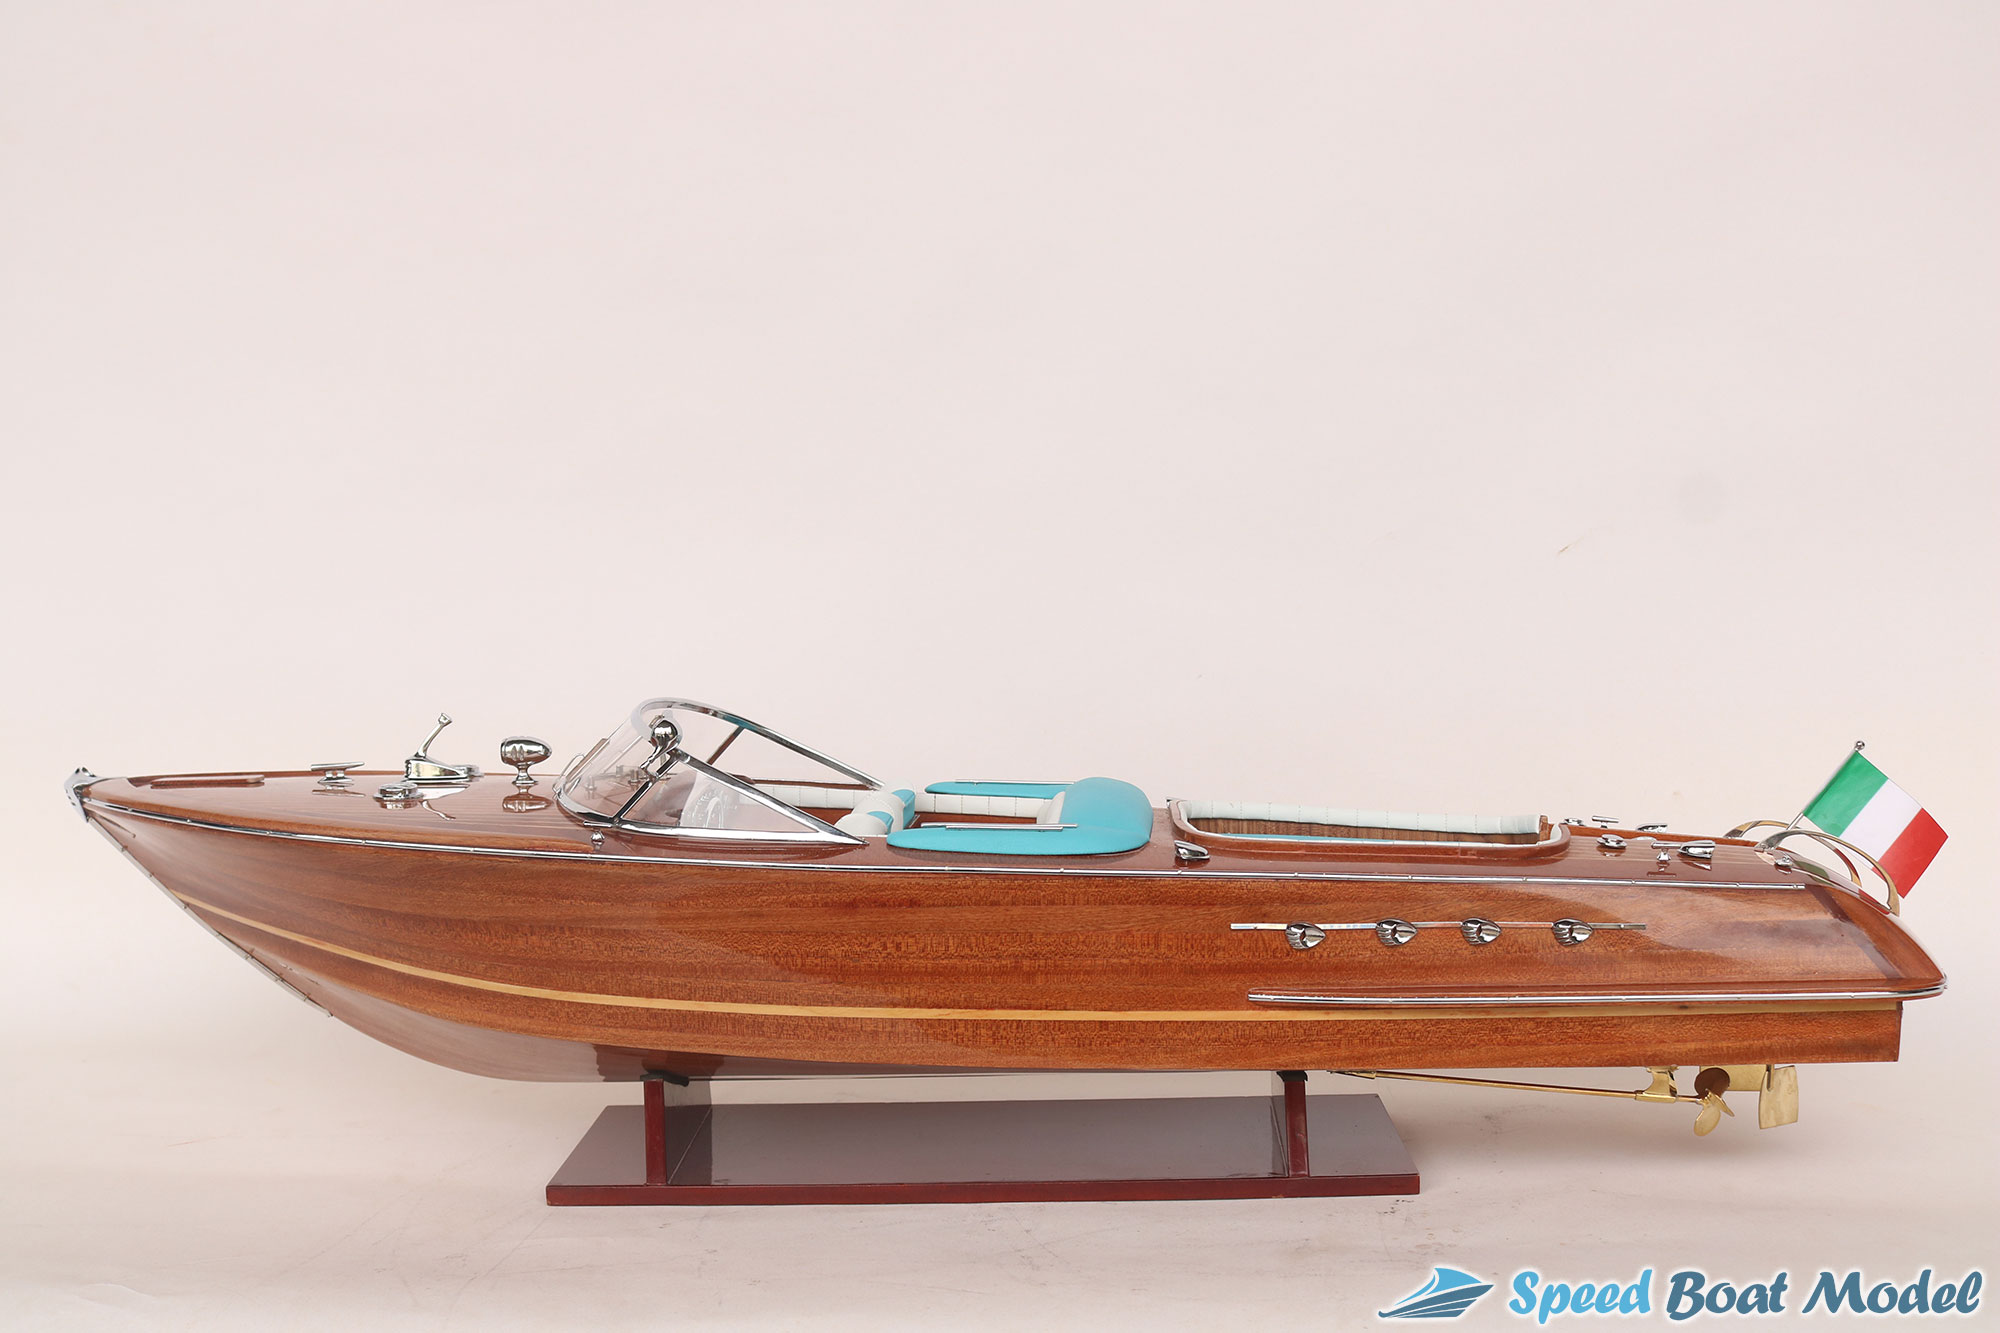 Riva Aquarama Wood Finshed Classic Speed Boat 34.2"